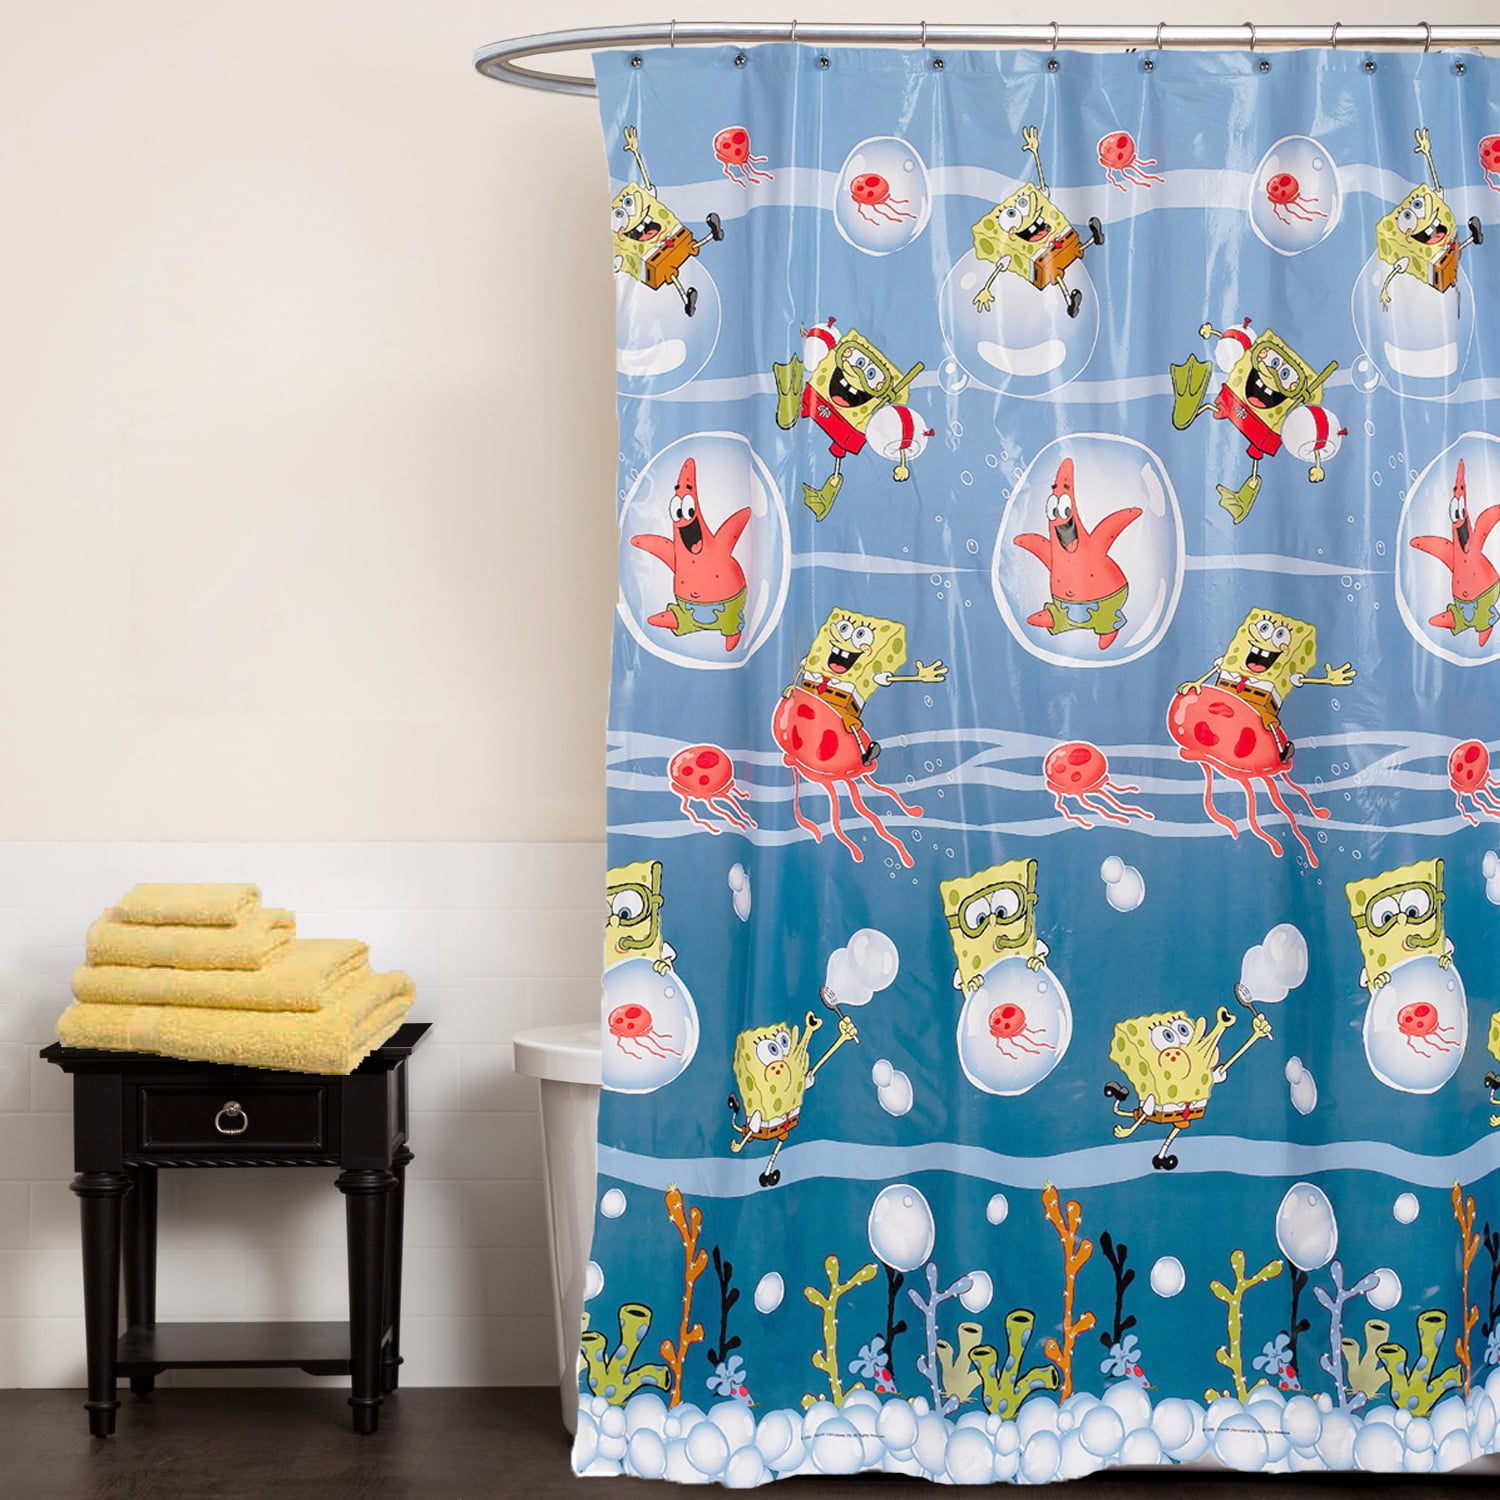 Sponge Bob Shower Curtain Waterproof Bath Curtains with 12 Hooks Bathroom Decor 